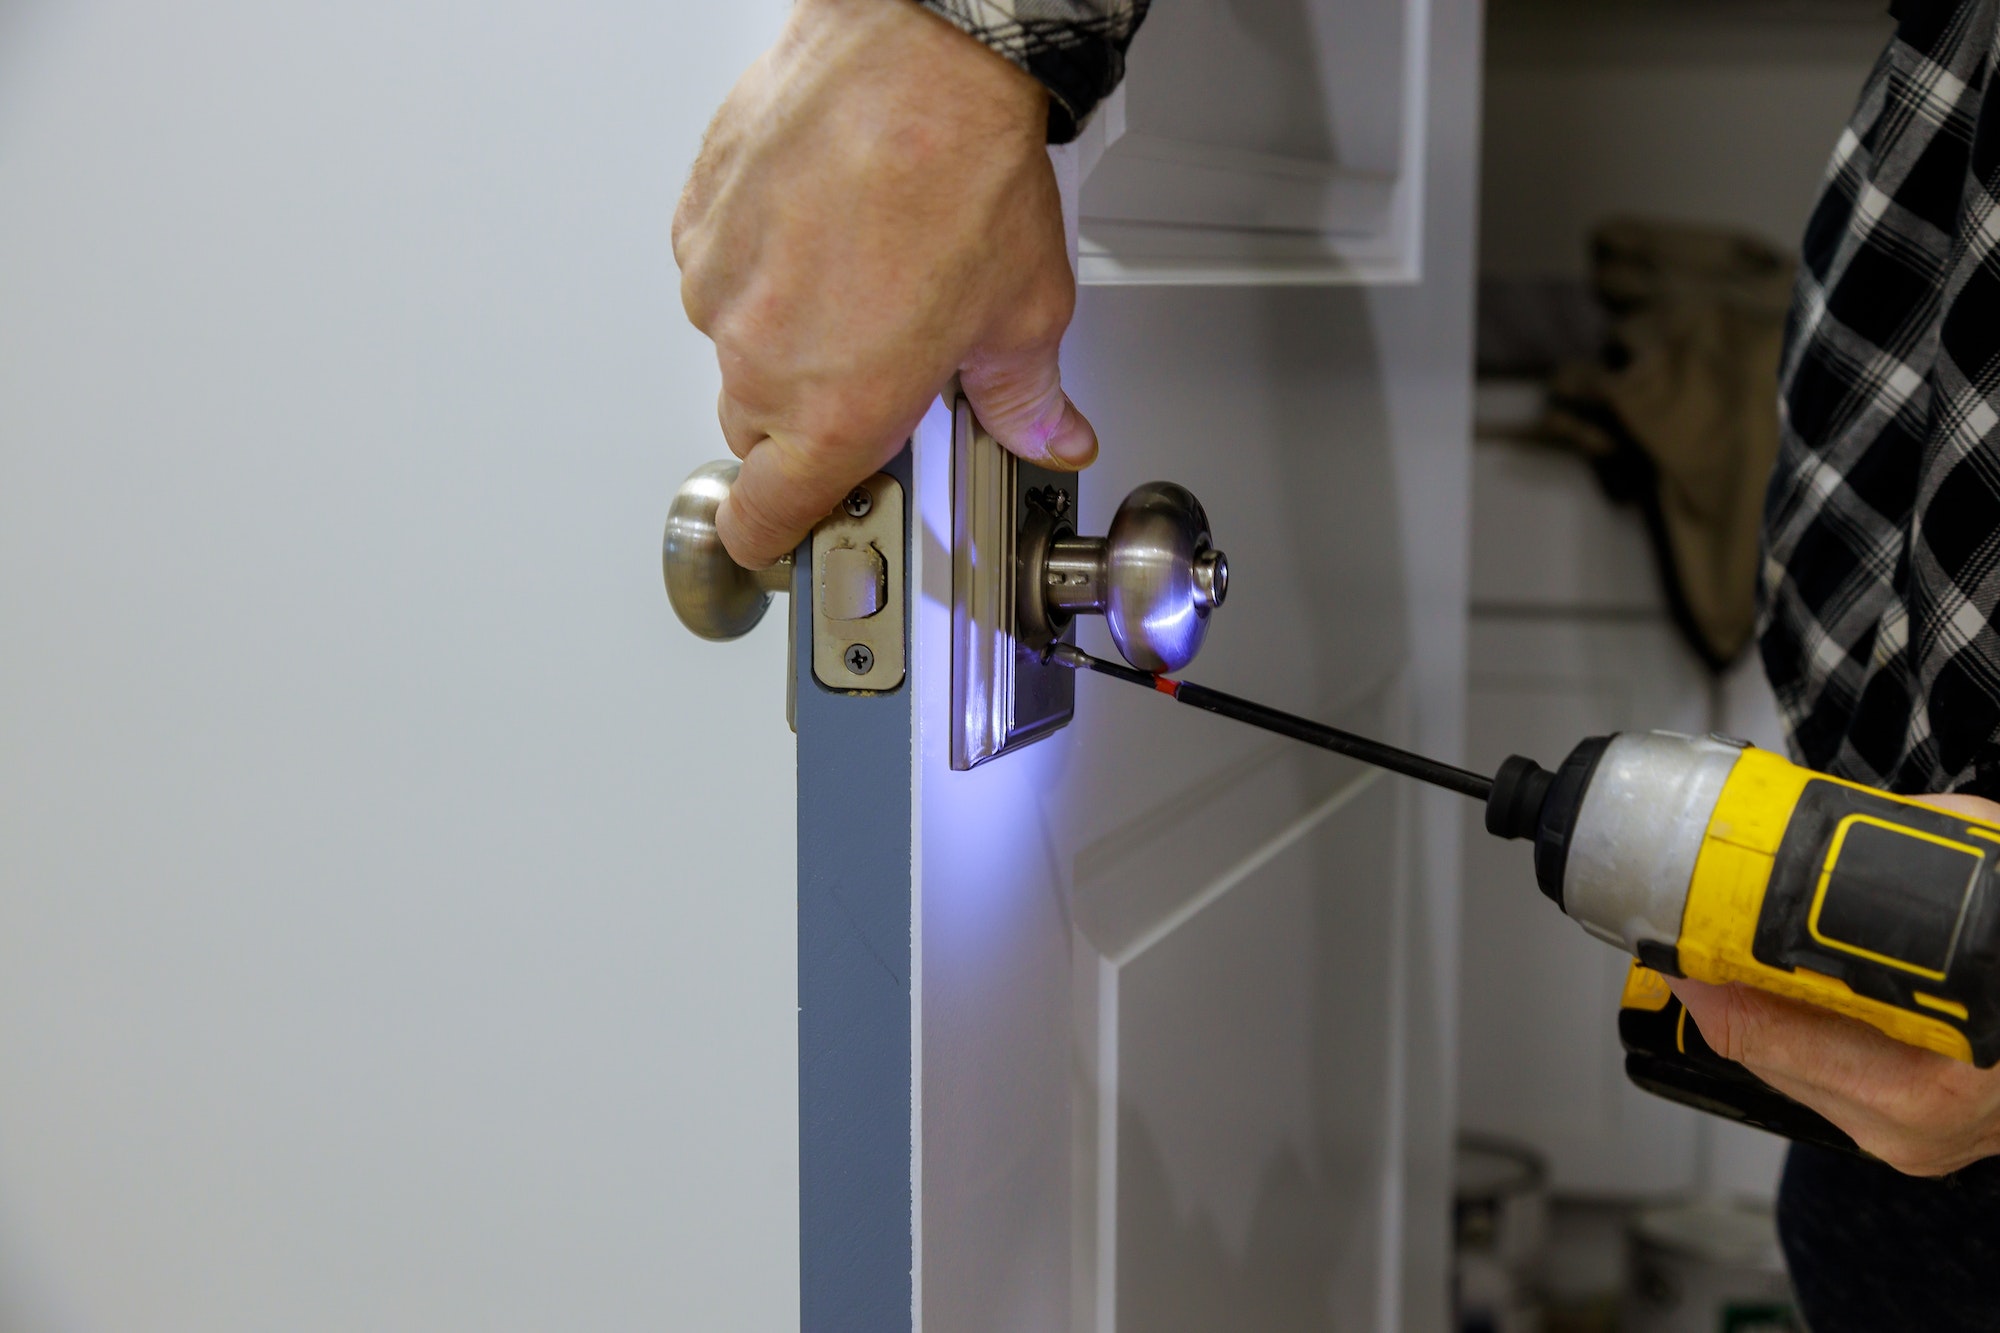 Maintenance in the apartment woodworker hands is installing the doors handle